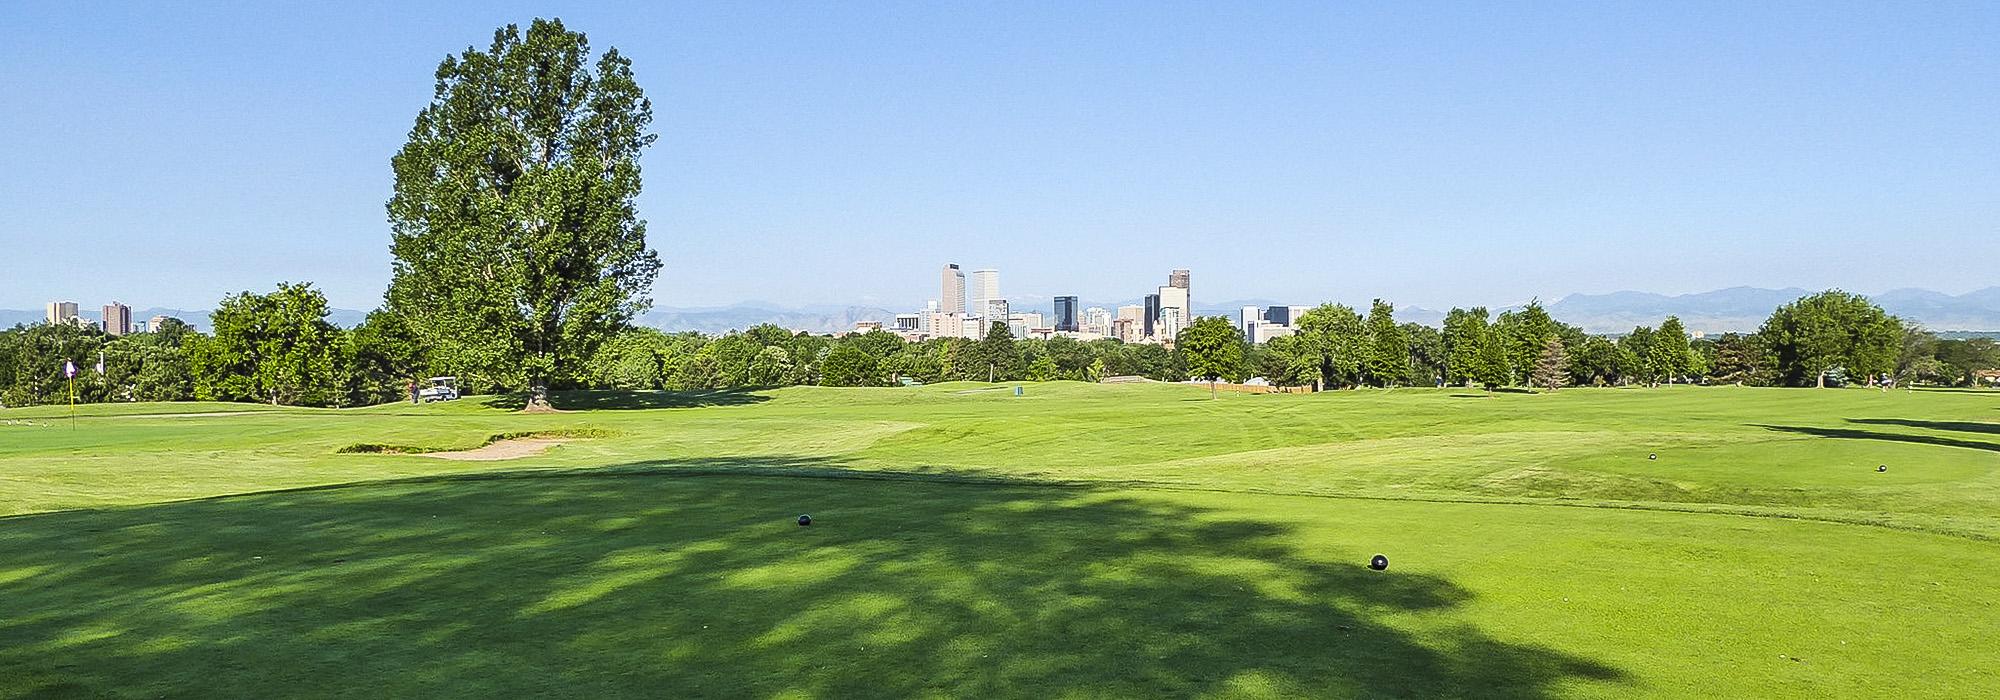 City Park Golf Course, Denver CO